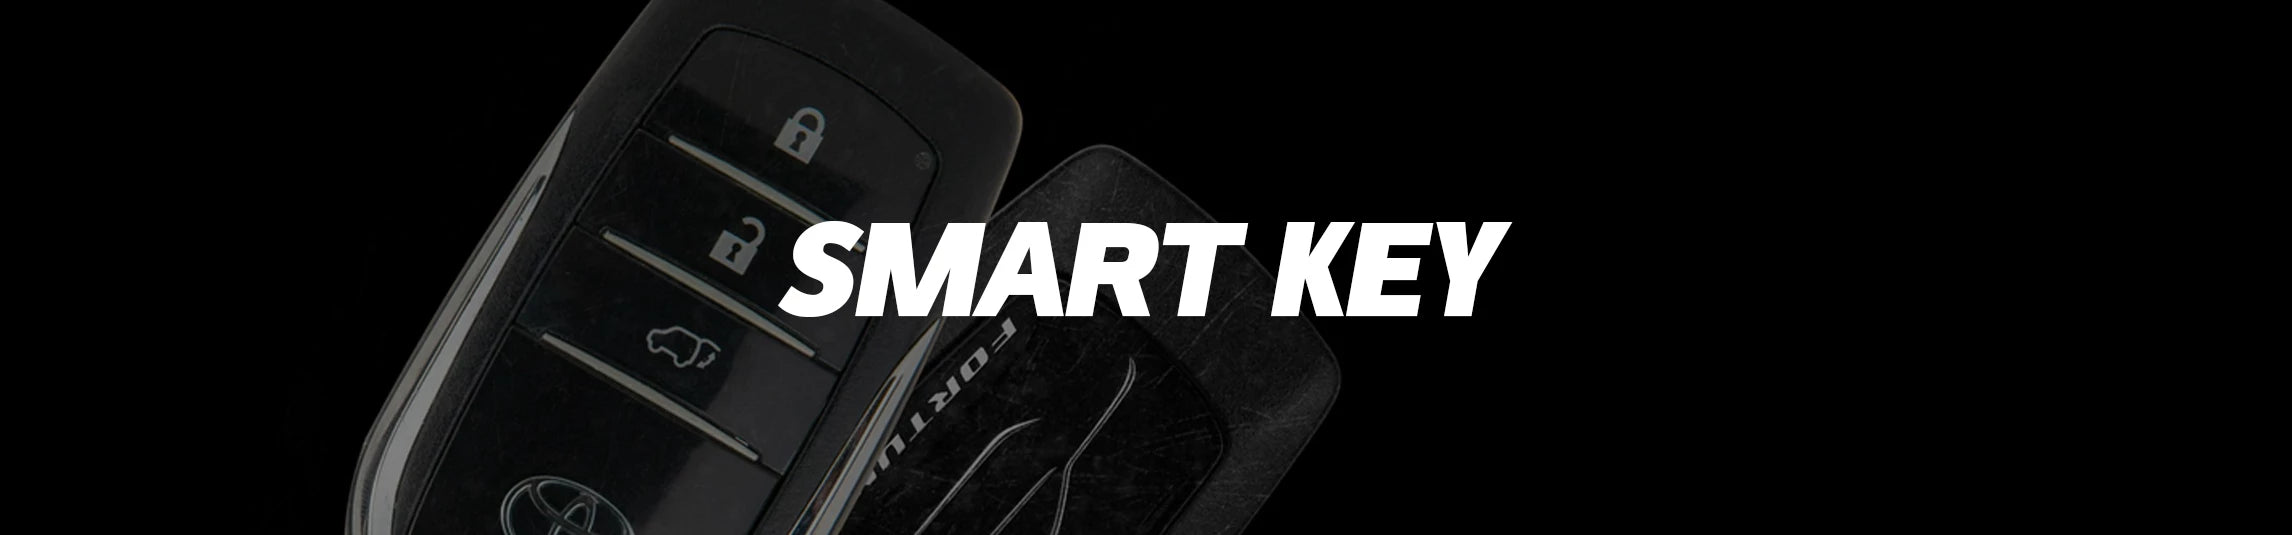 Smart Key - Autobacs India